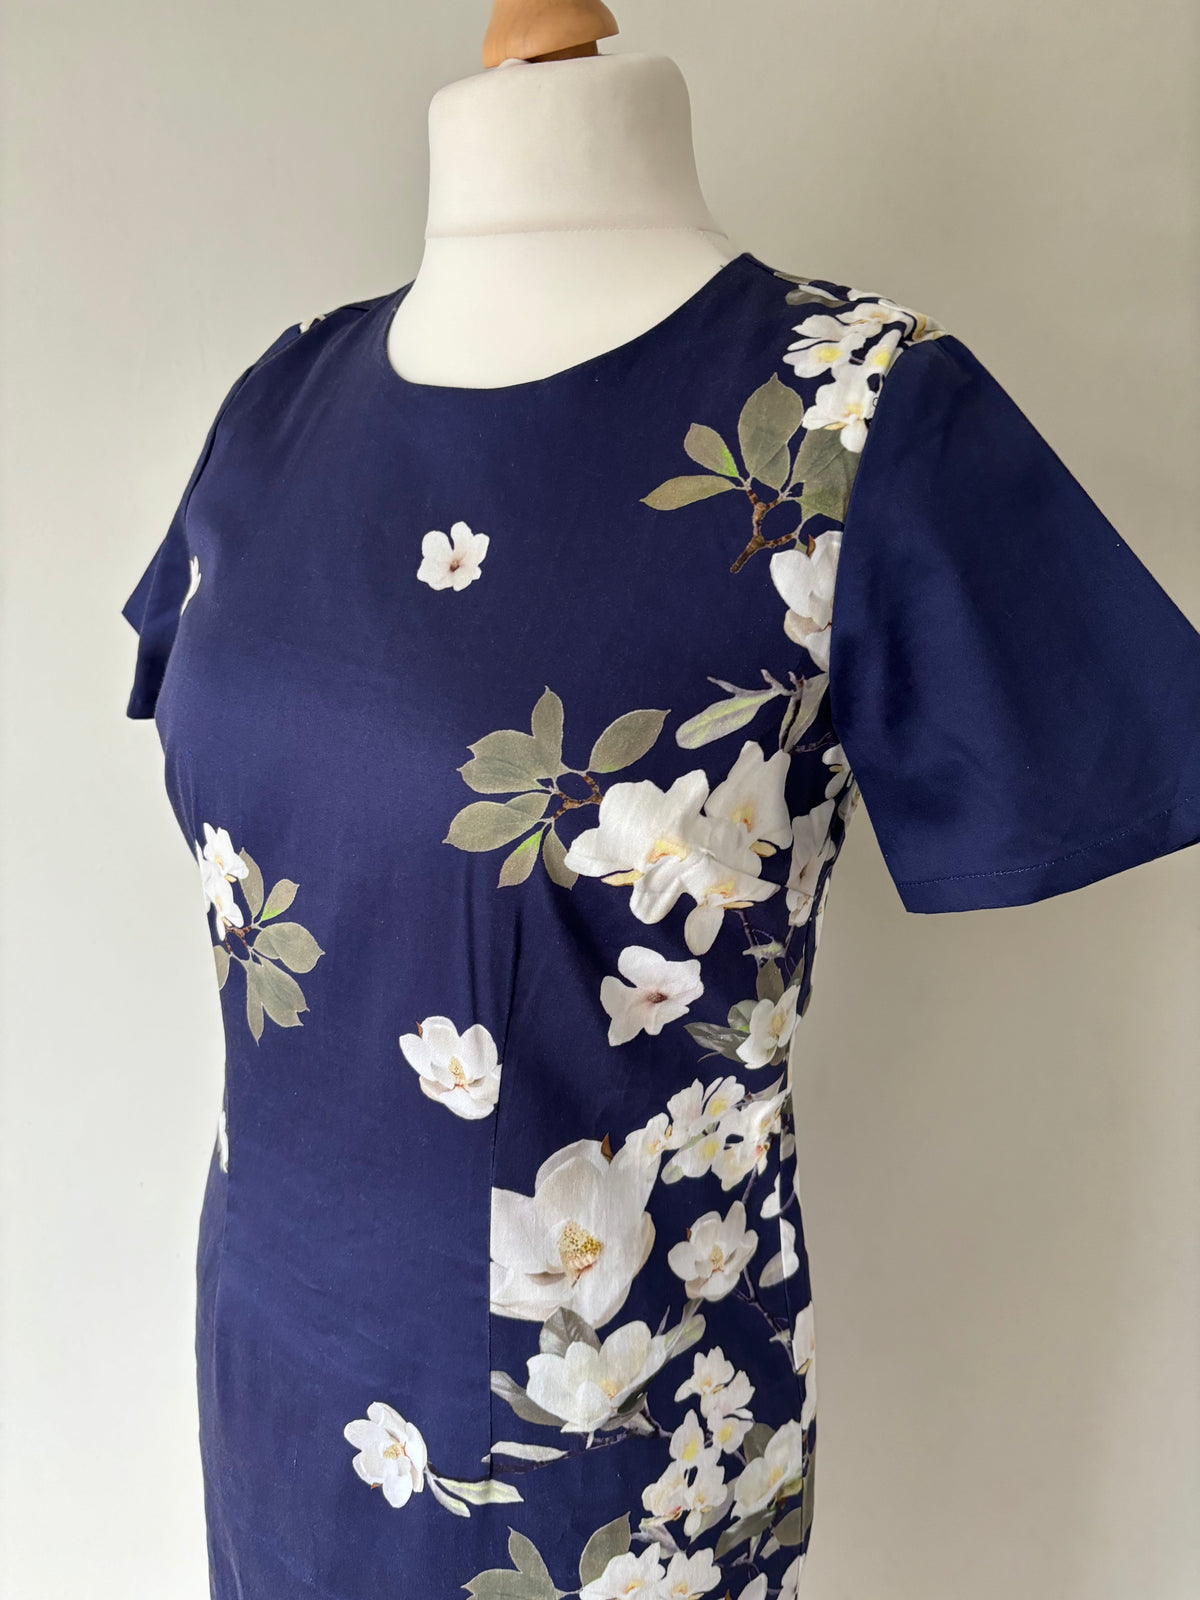 Floral print short sleeve dress Size 10 Witt freemans